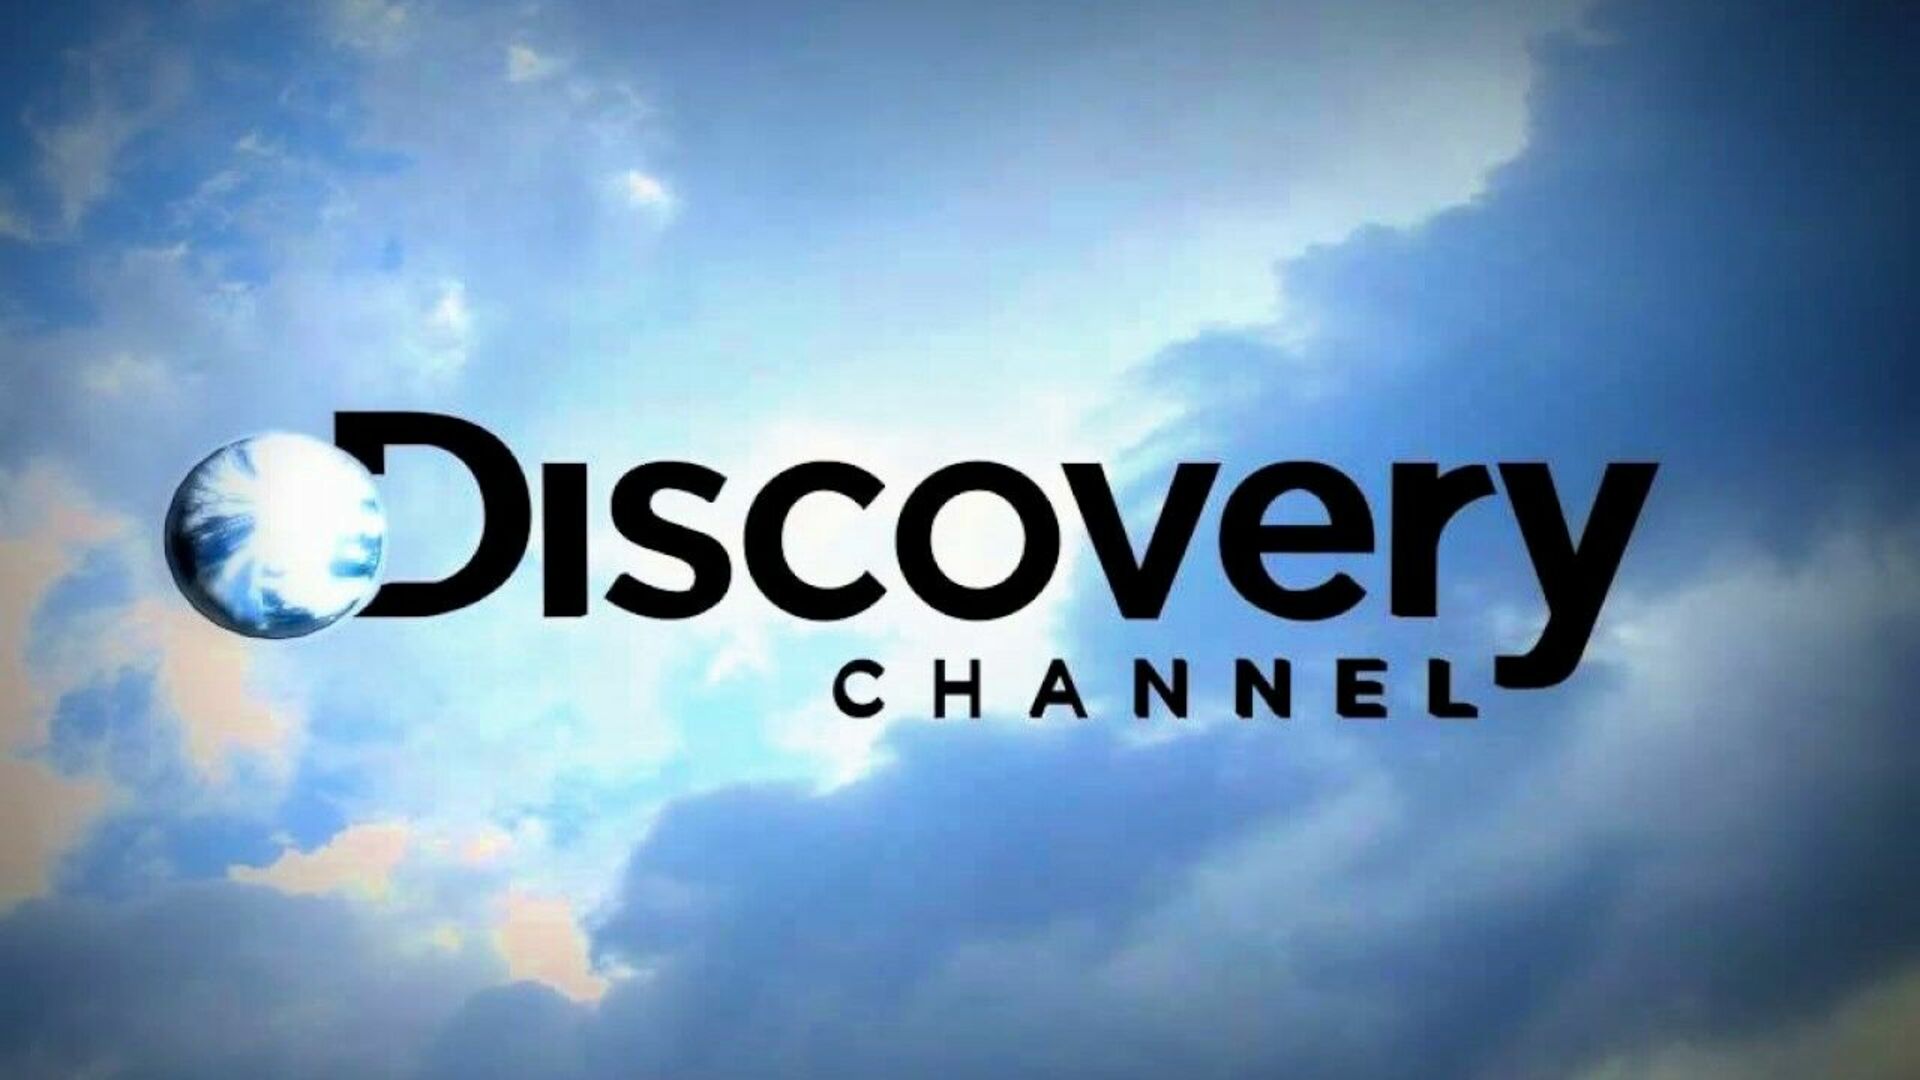 Покажи дискавери. Телеканал Discovery. Дискавери заставка. Дискавери канал ТВ. Discovery channel заставка.